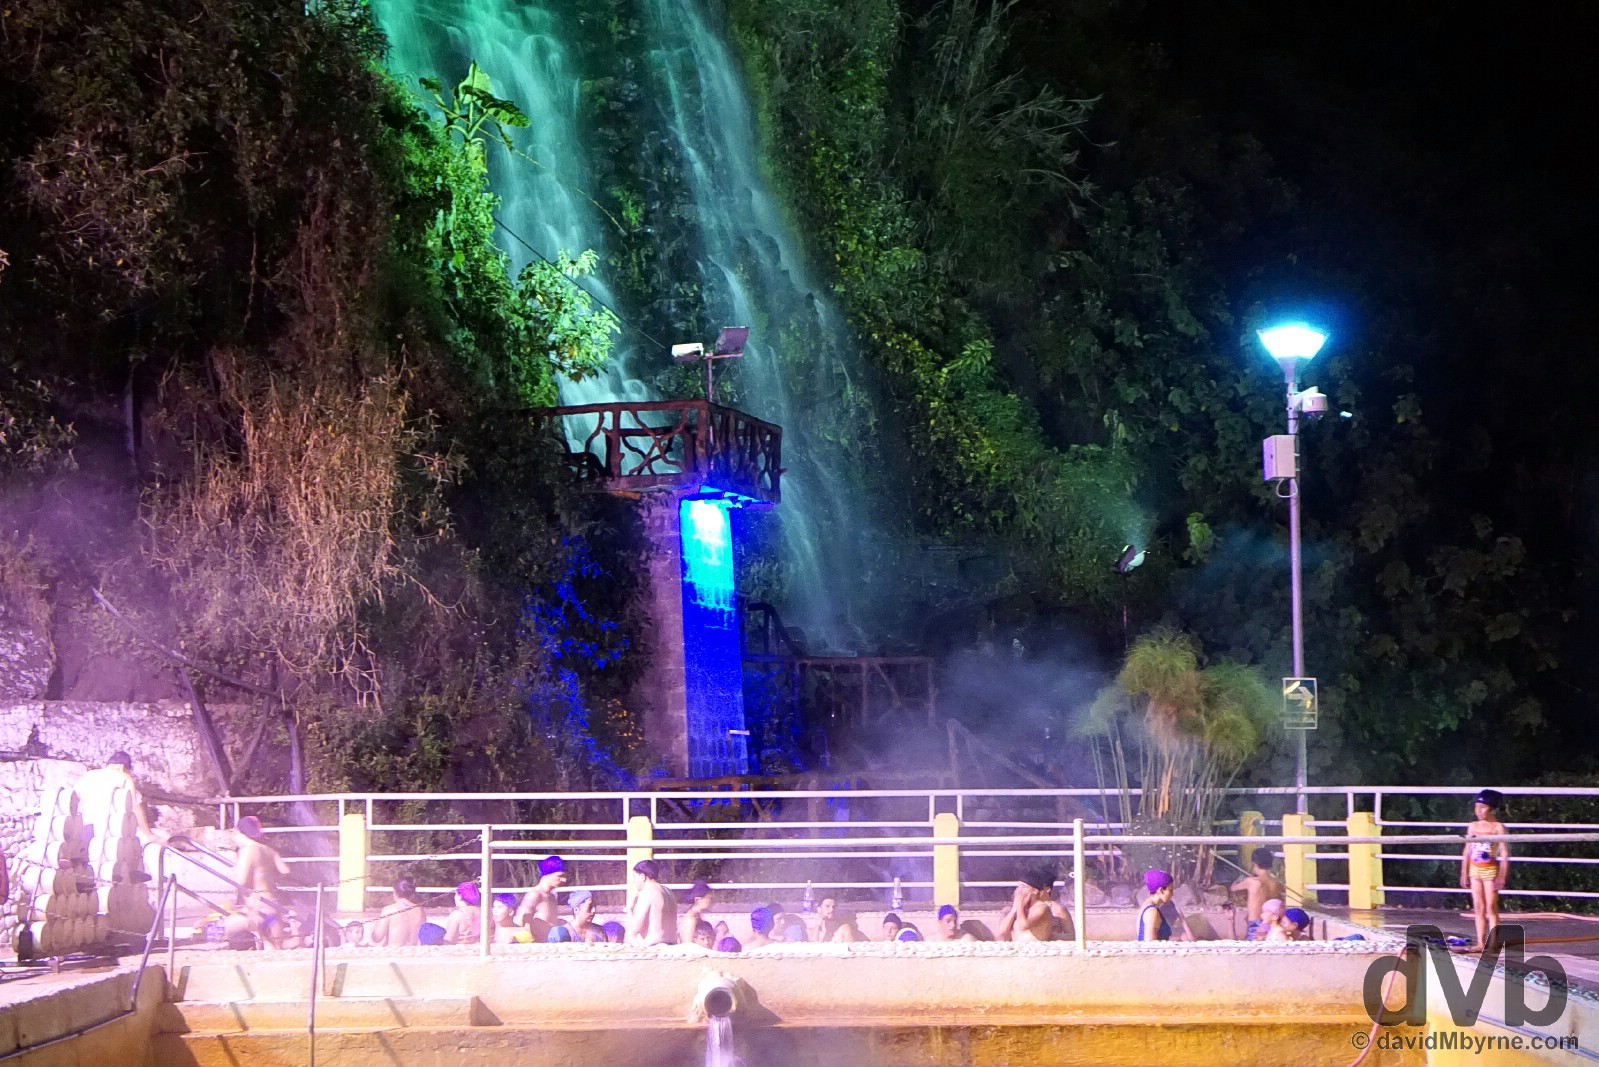 Night bathing at the Piscinas de la Virgen near the base of the Virgen waterfall in Banos, Ecuador. July 9, 2015.